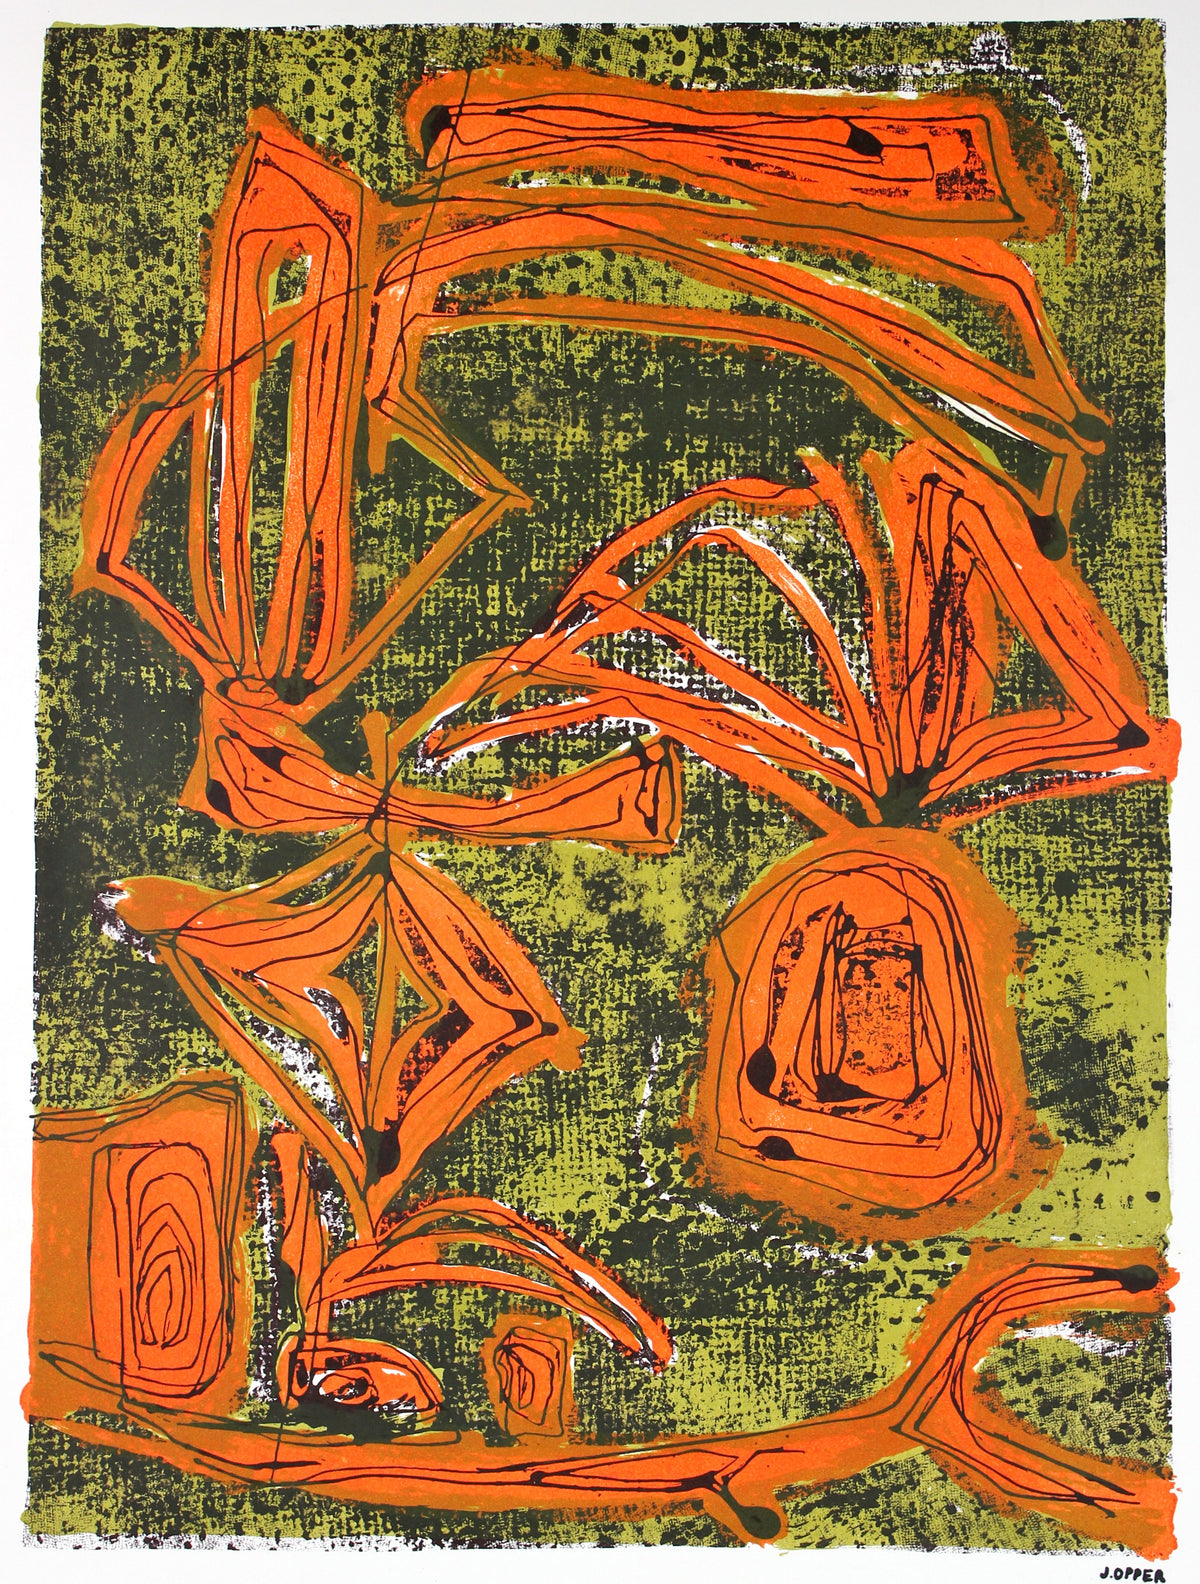 Green &amp; Orange Organic Forms&lt;br&gt;1940-50s Stone Lithograph&lt;br&gt;&lt;br&gt;#40755